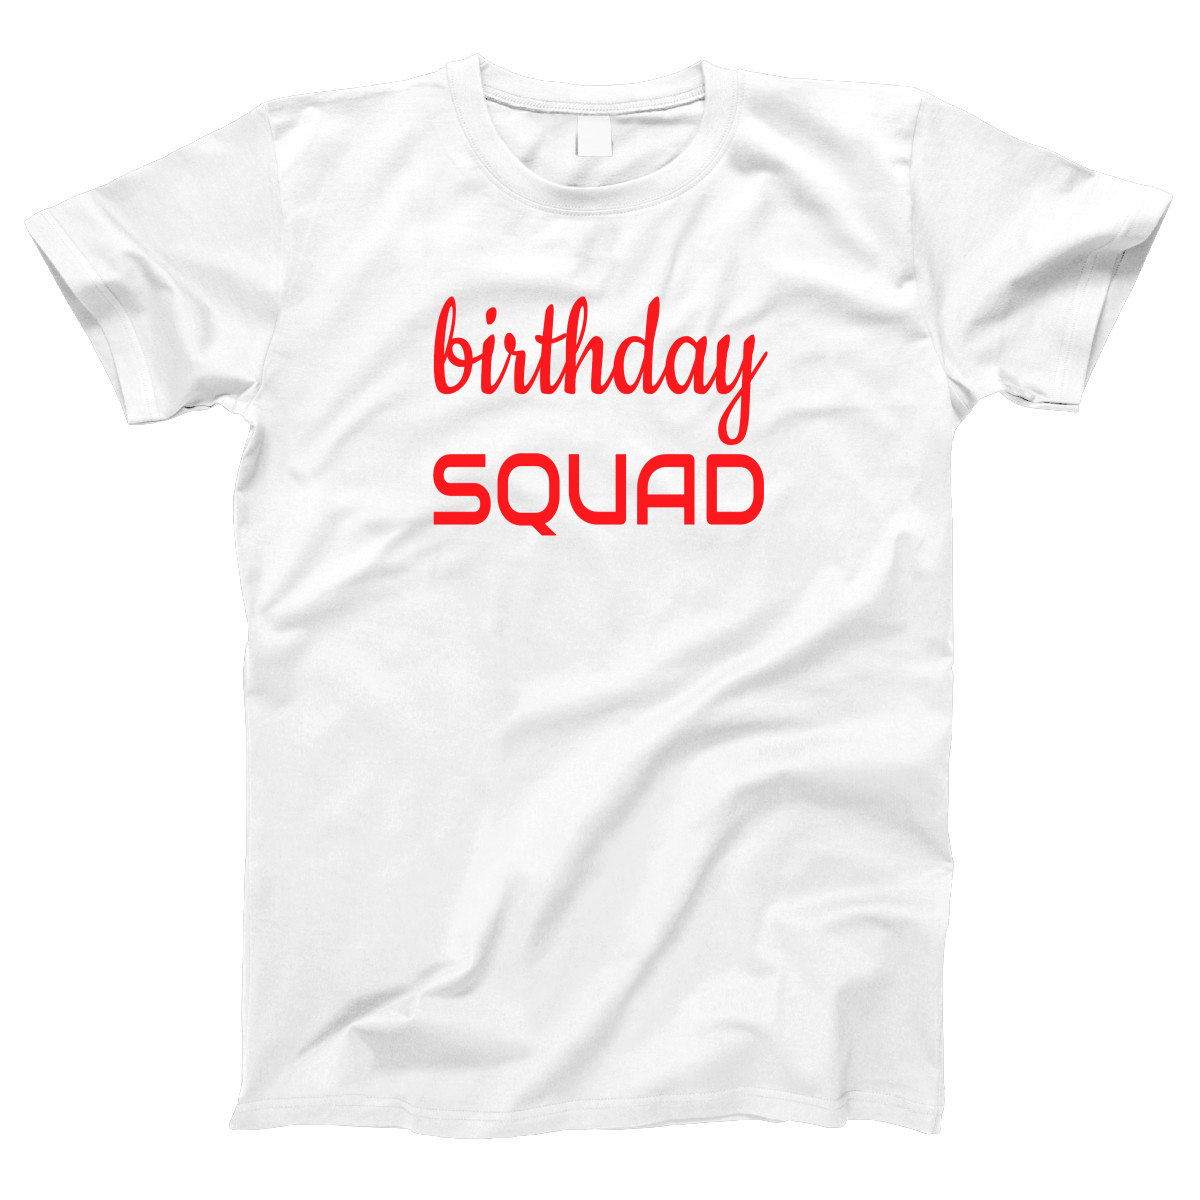 Birthday SQUAD Women's T-shirt | White